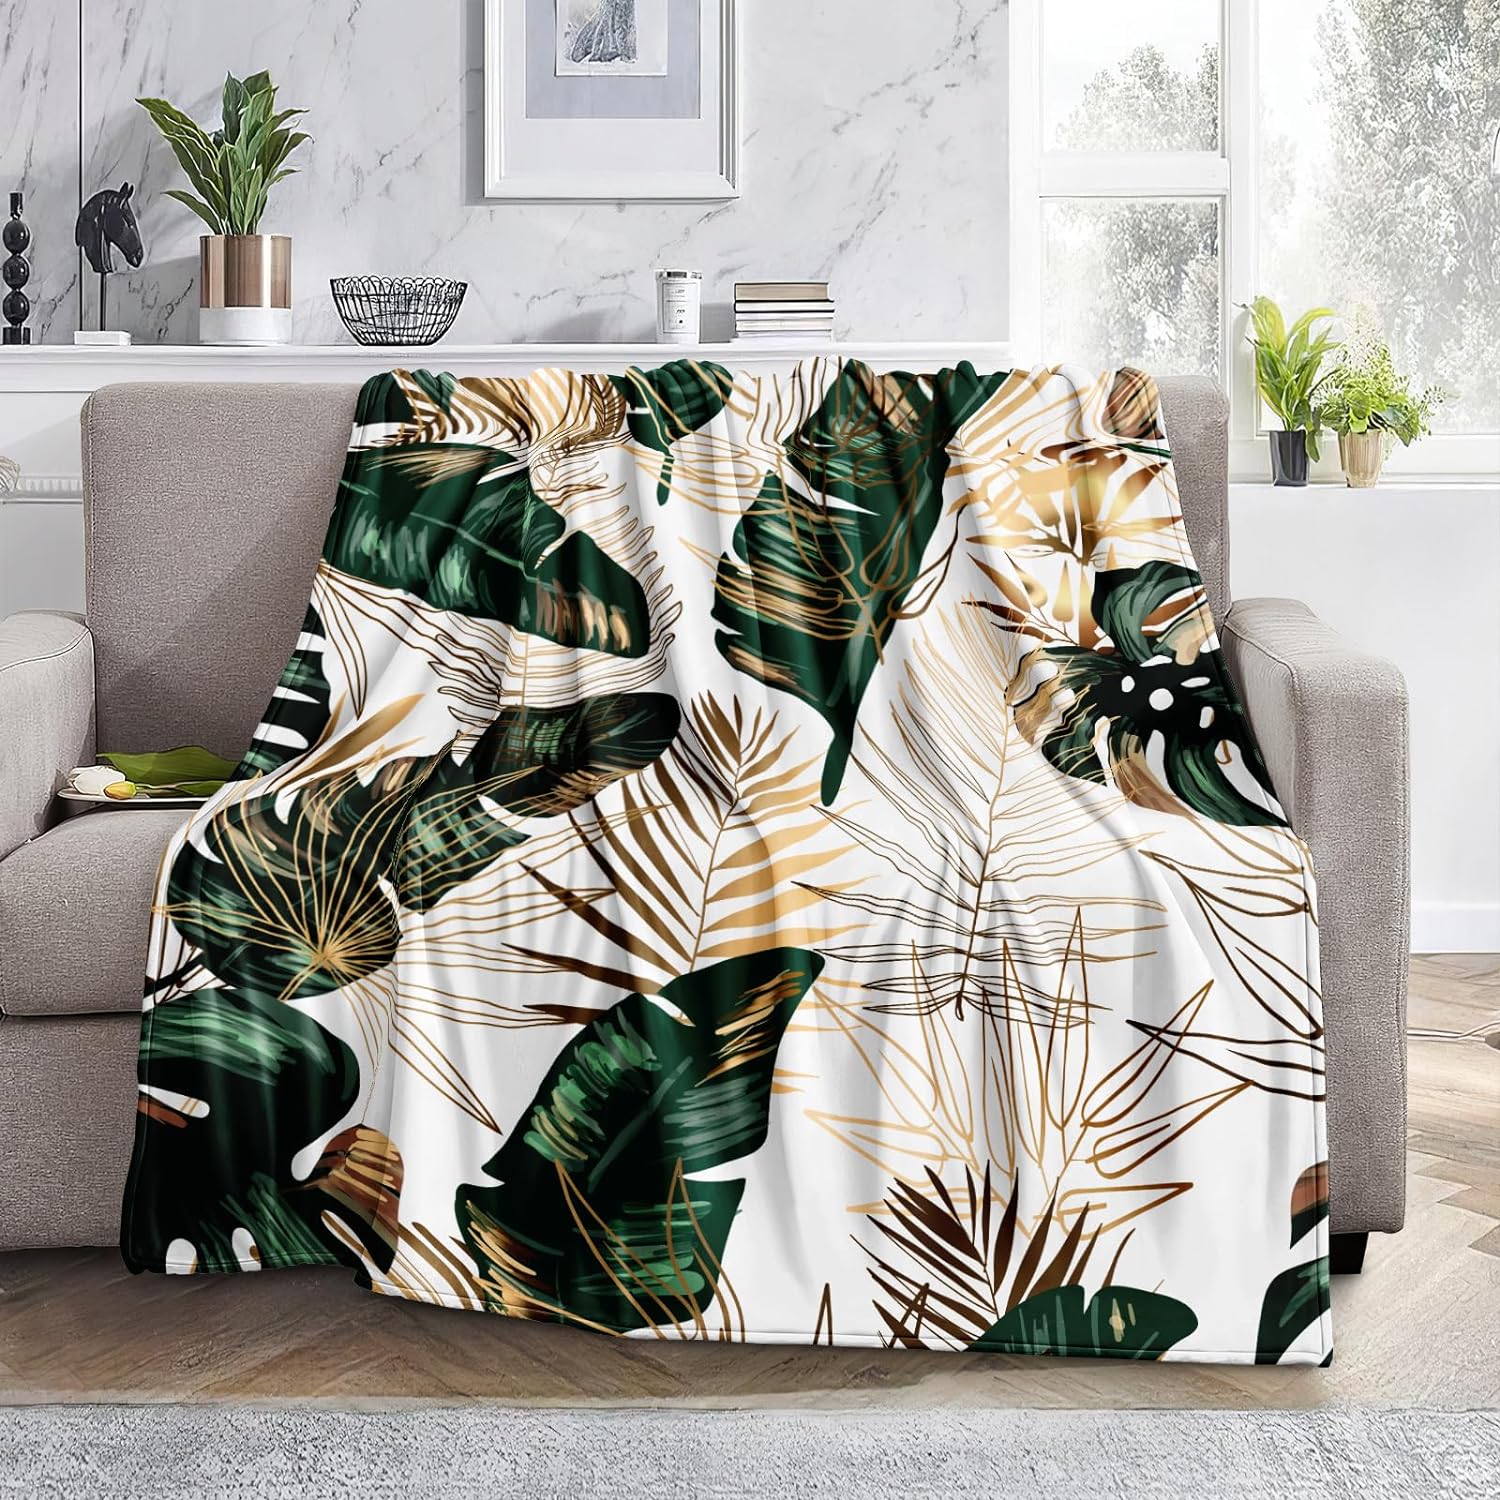 Bedbay Green Gold Throw Blanket Tropical Palm Leaf Ultra Soft Warm Blanket Lightweight Plush Fuzzy Throw Blanket for Couch Sofa Christmas Decorations (Leaf, Throw(50x60))